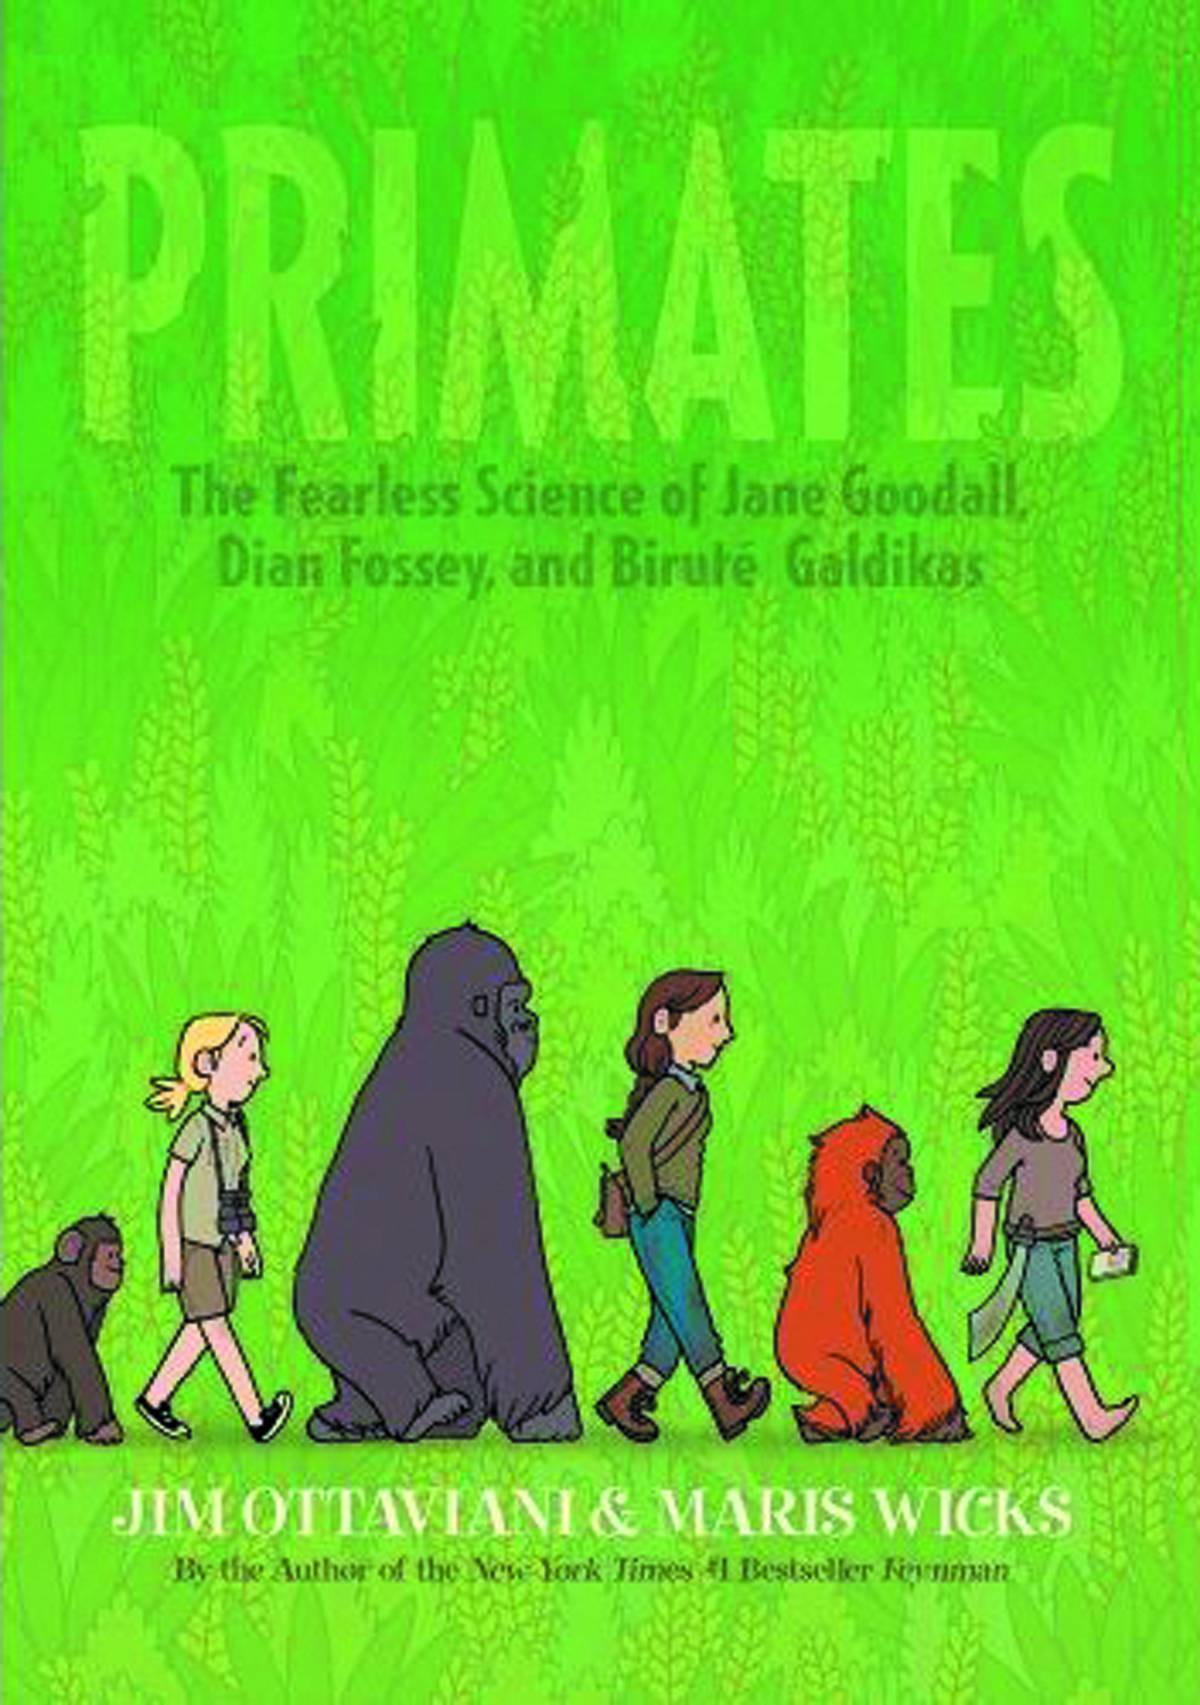 Primates Fearless Science of Goodall Fossey & Galdikas Hardcover